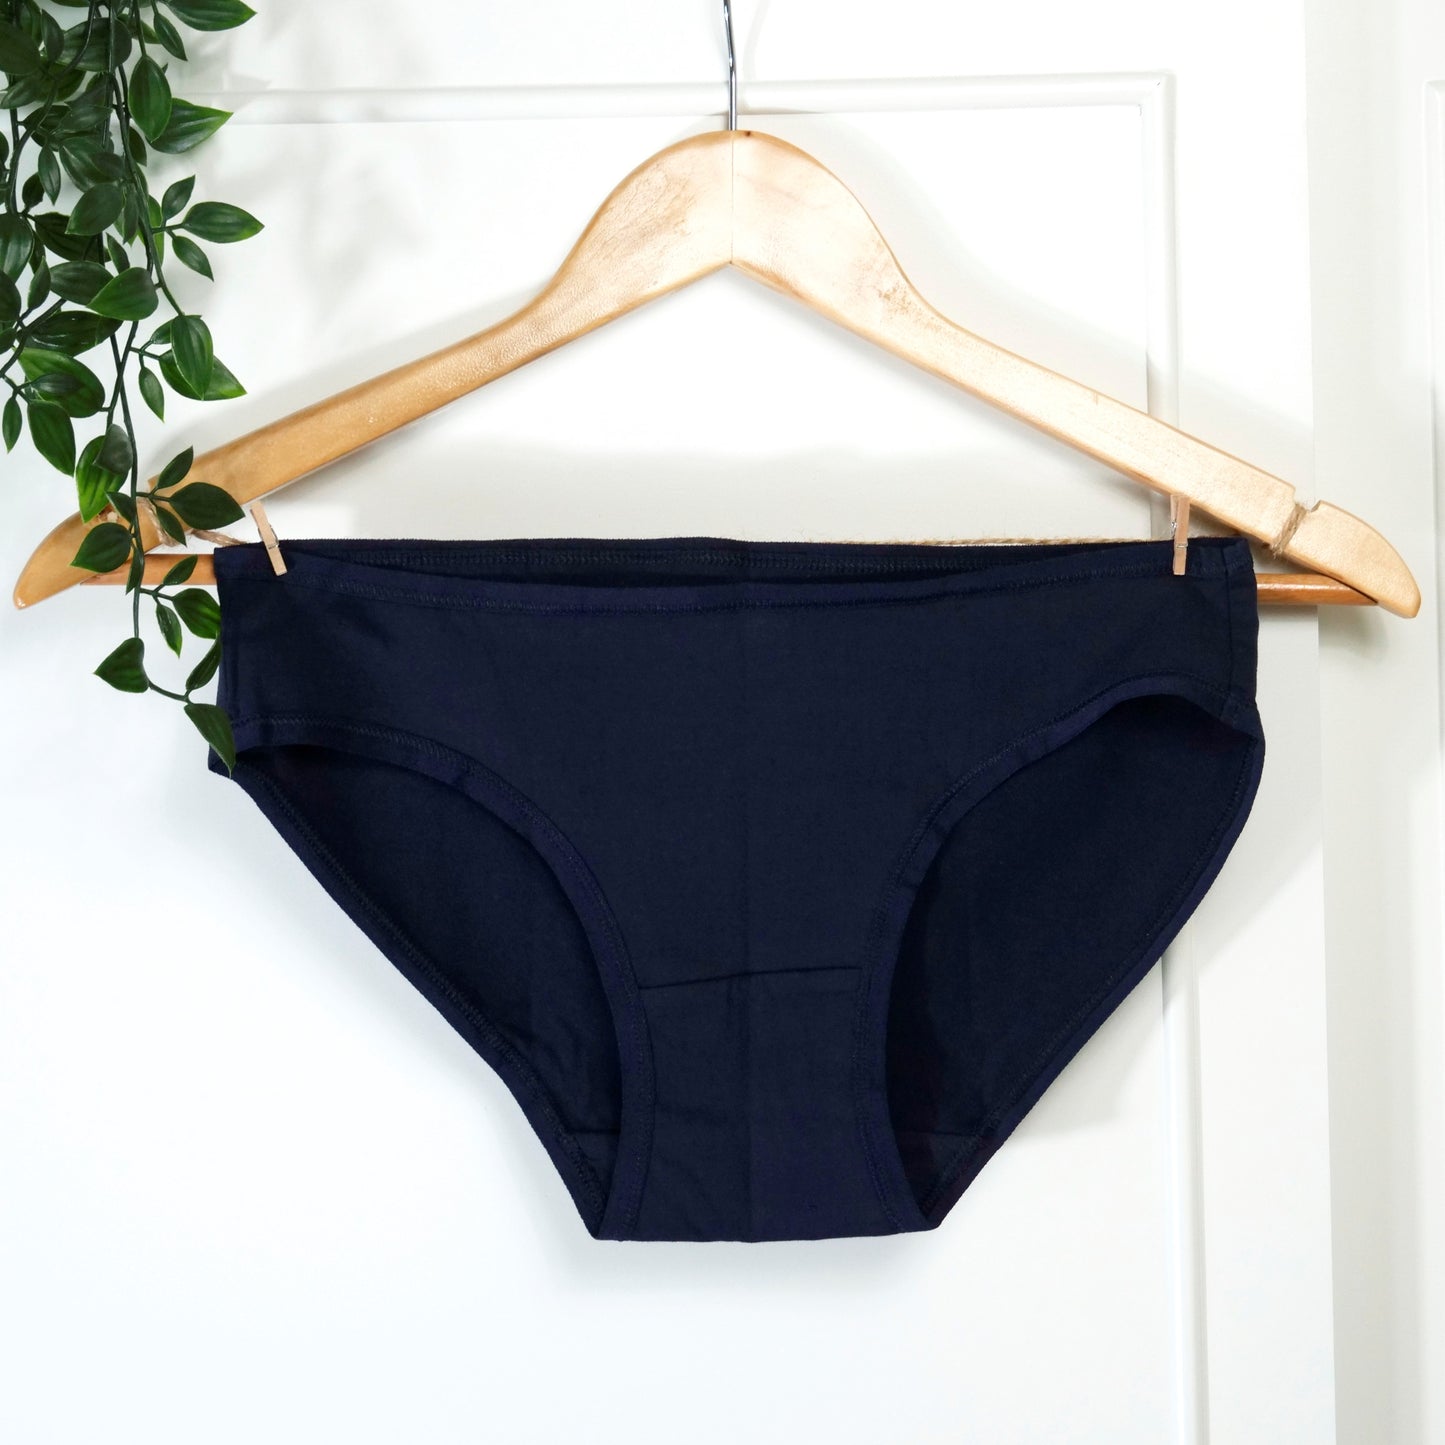 Women’s organic cotton low-rise bikini bottoms in navy blue